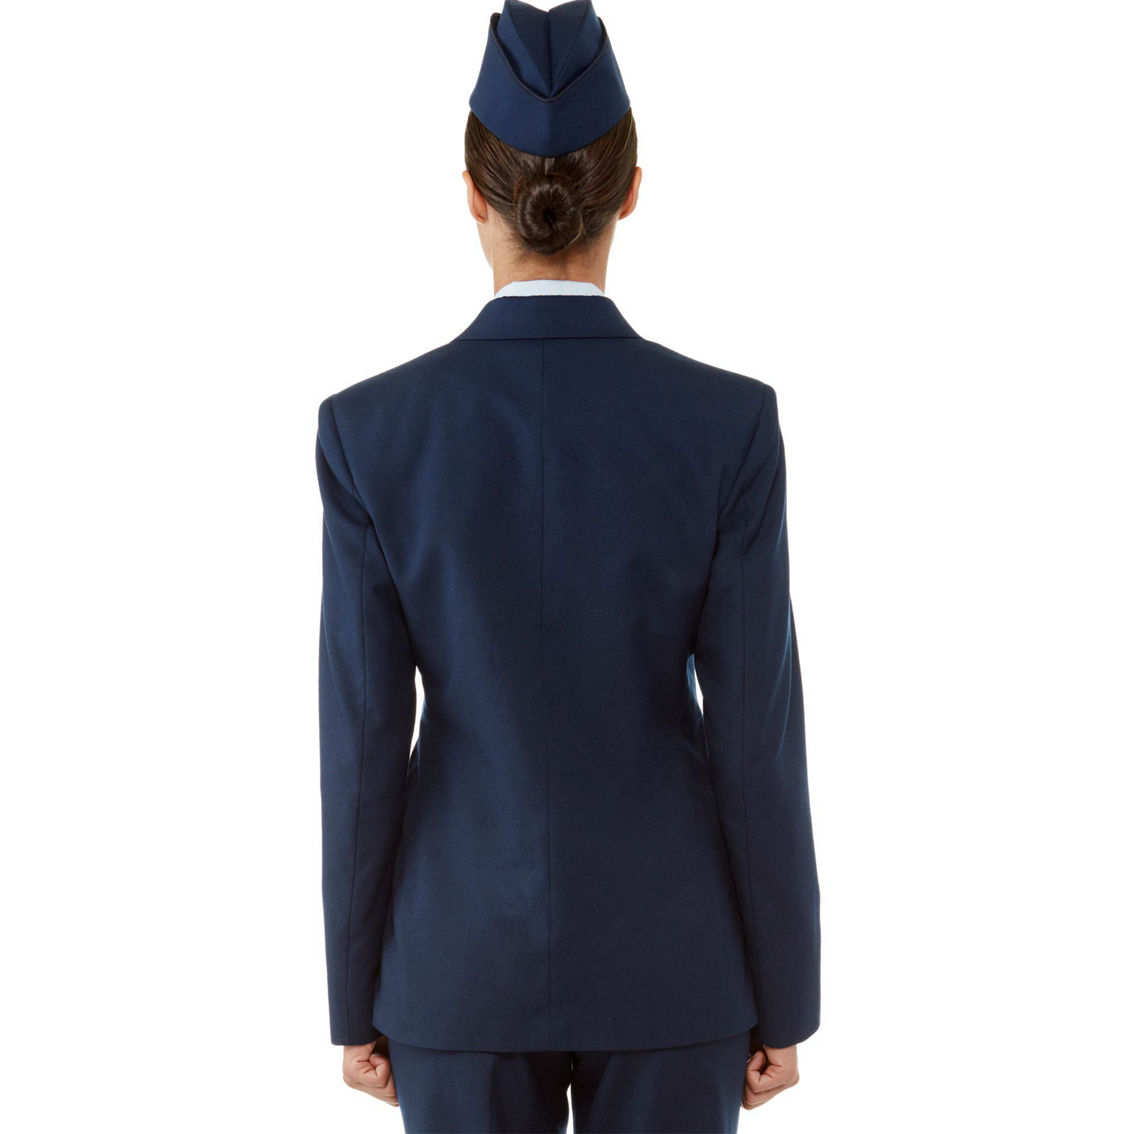 DLATS Air Force Female Enlisted Service Dress Uniform Coat - Image 2 of 4